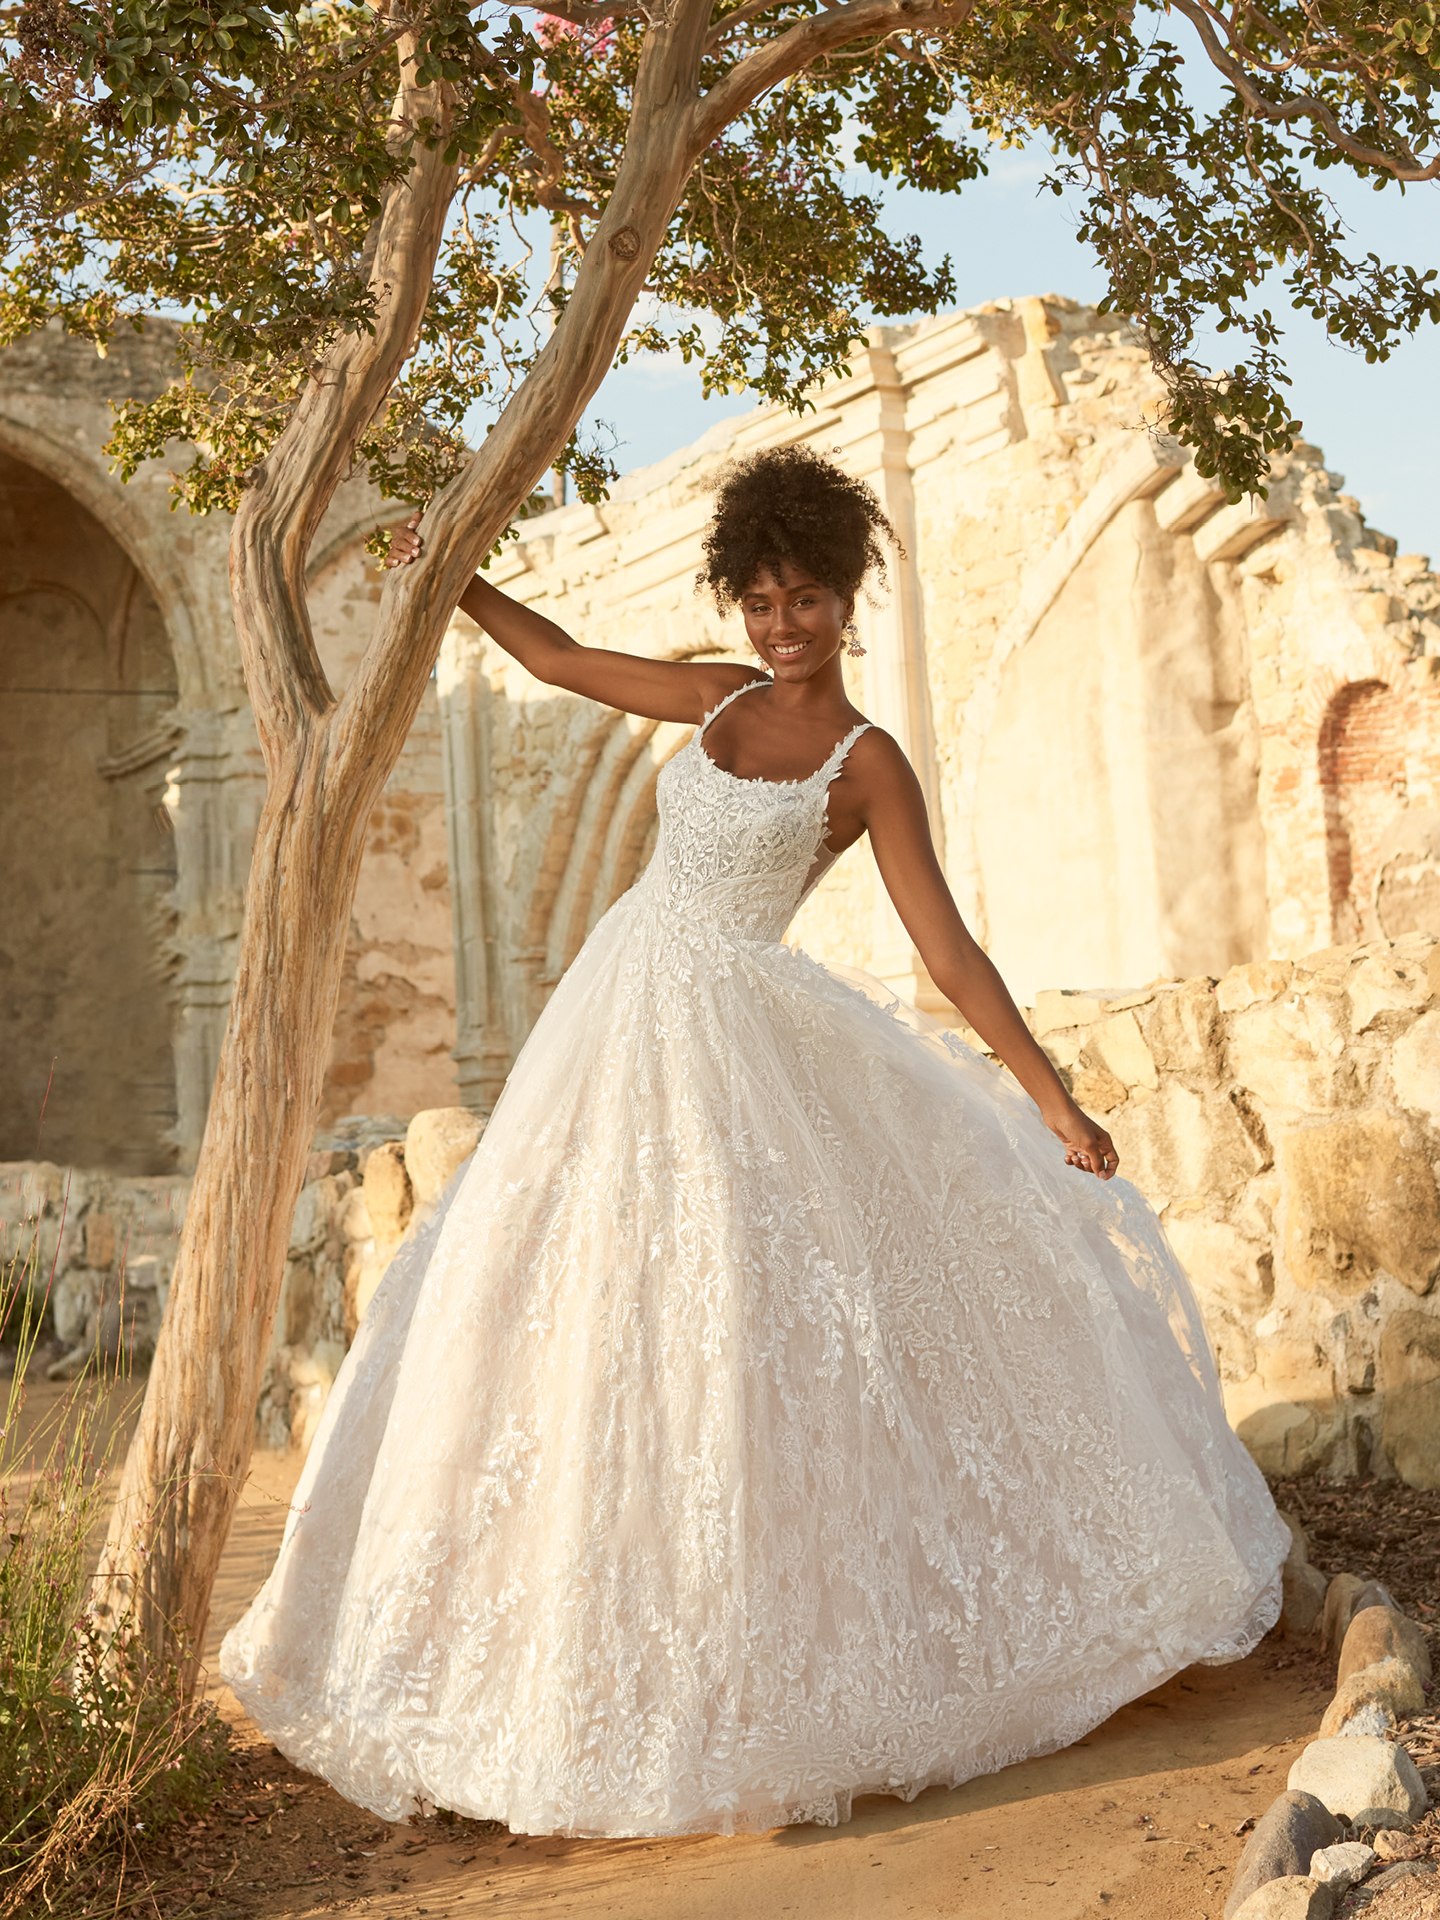 A-Line Wedding Dresses: 30 Bridal Looks + Expert Tips